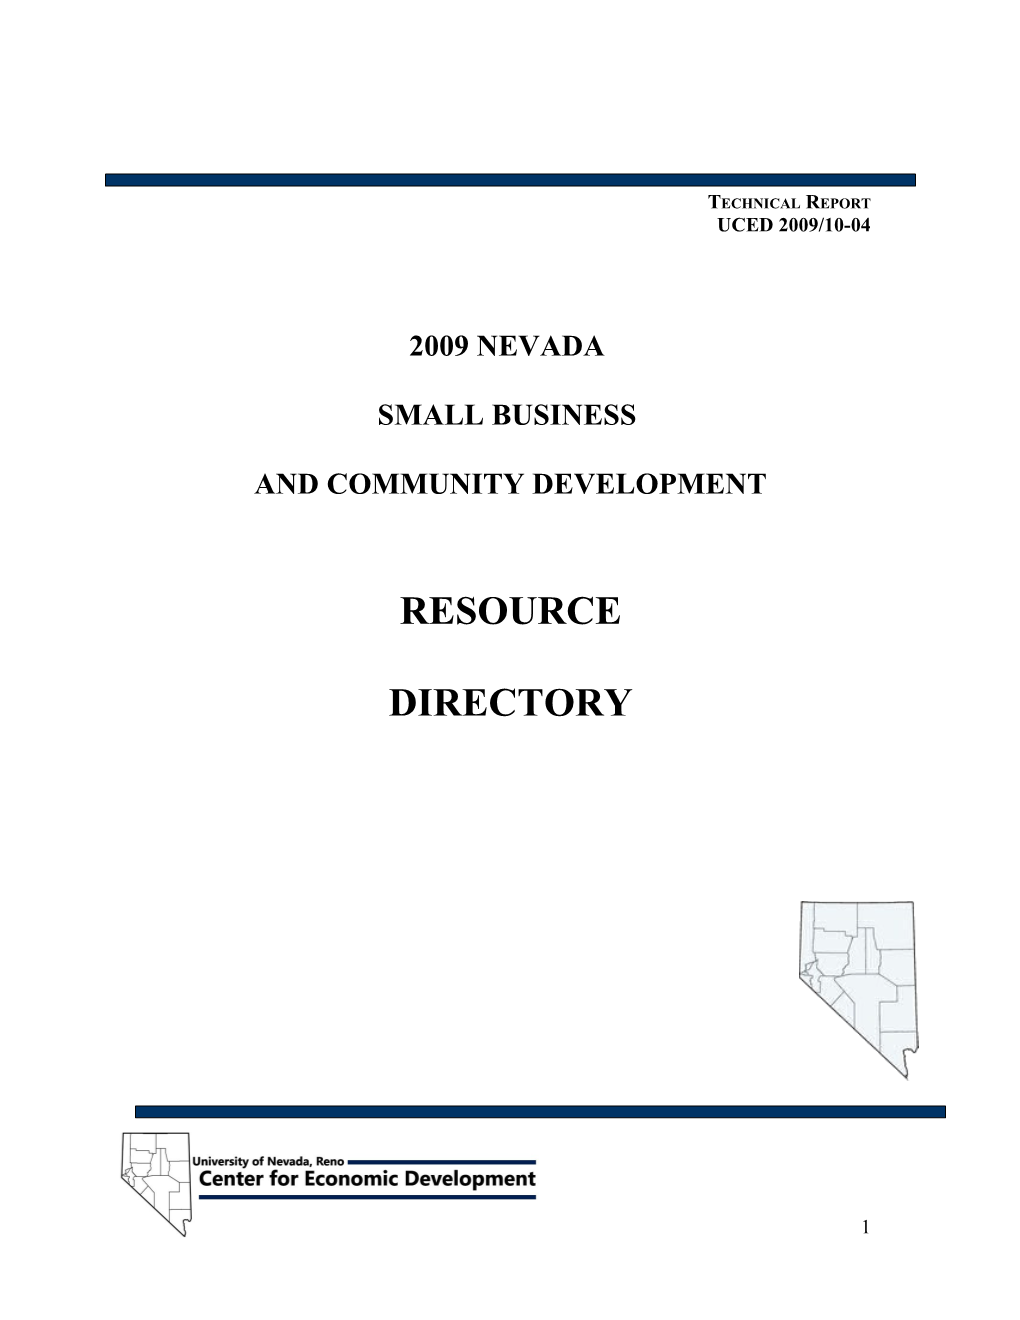 2009 Nevada Small Business and Community Development